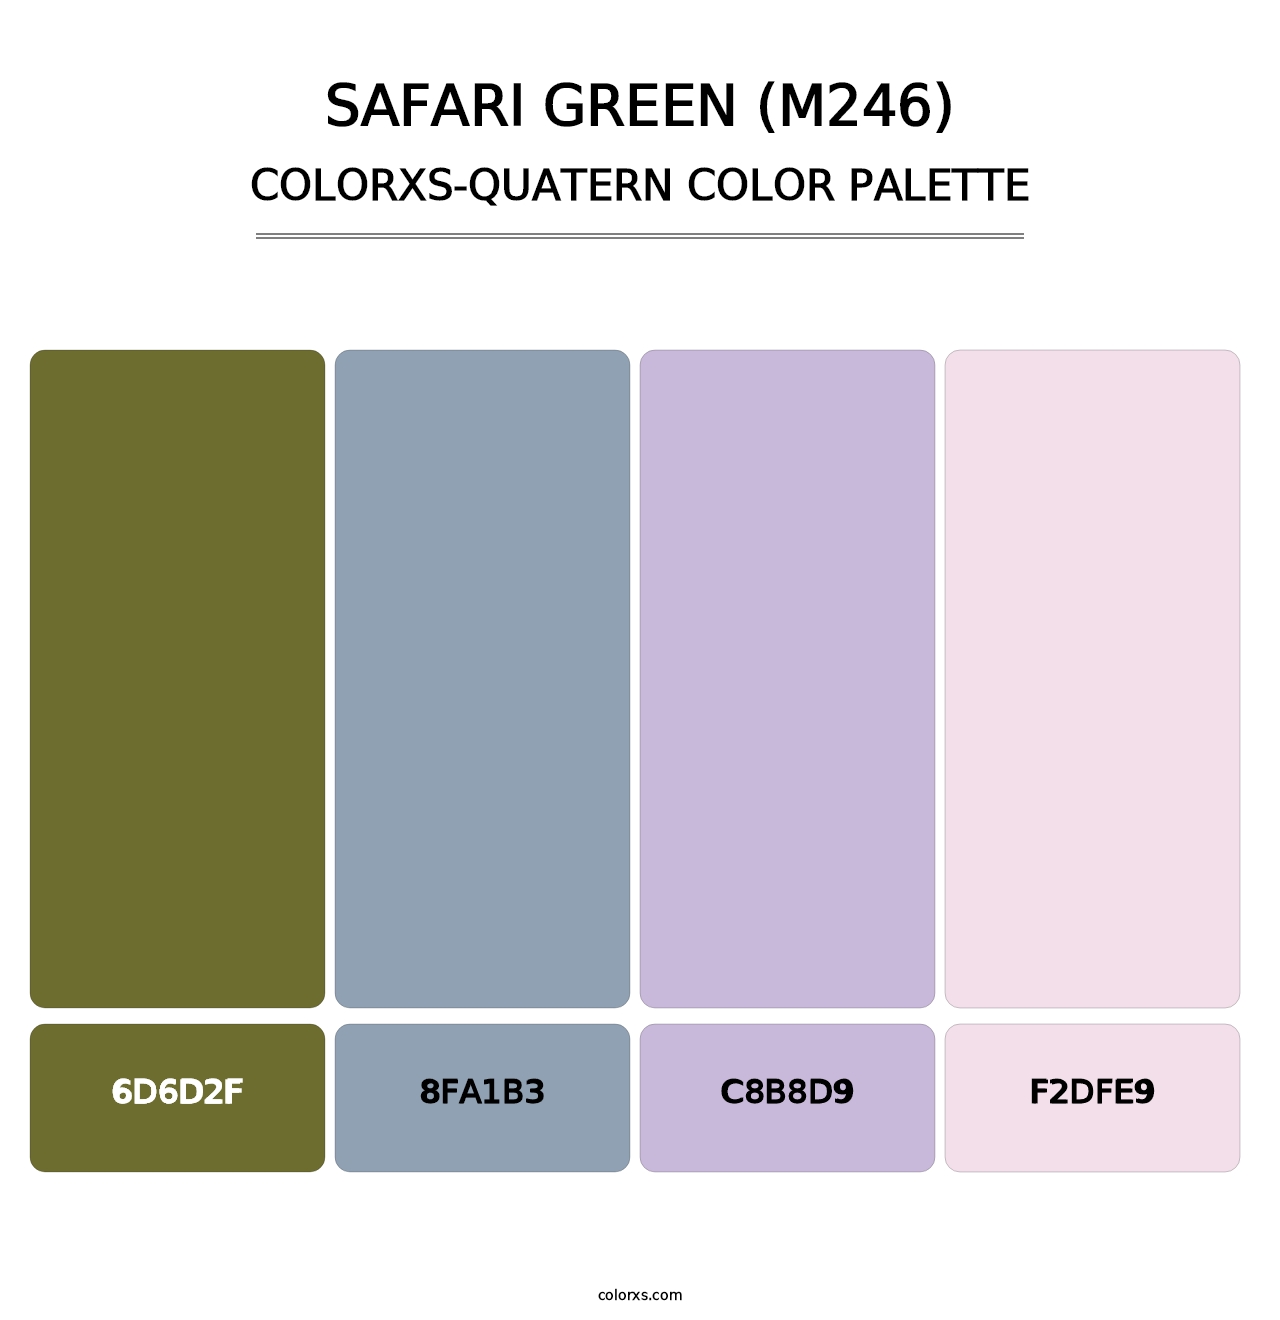 Safari Green (M246) - Colorxs Quatern Palette